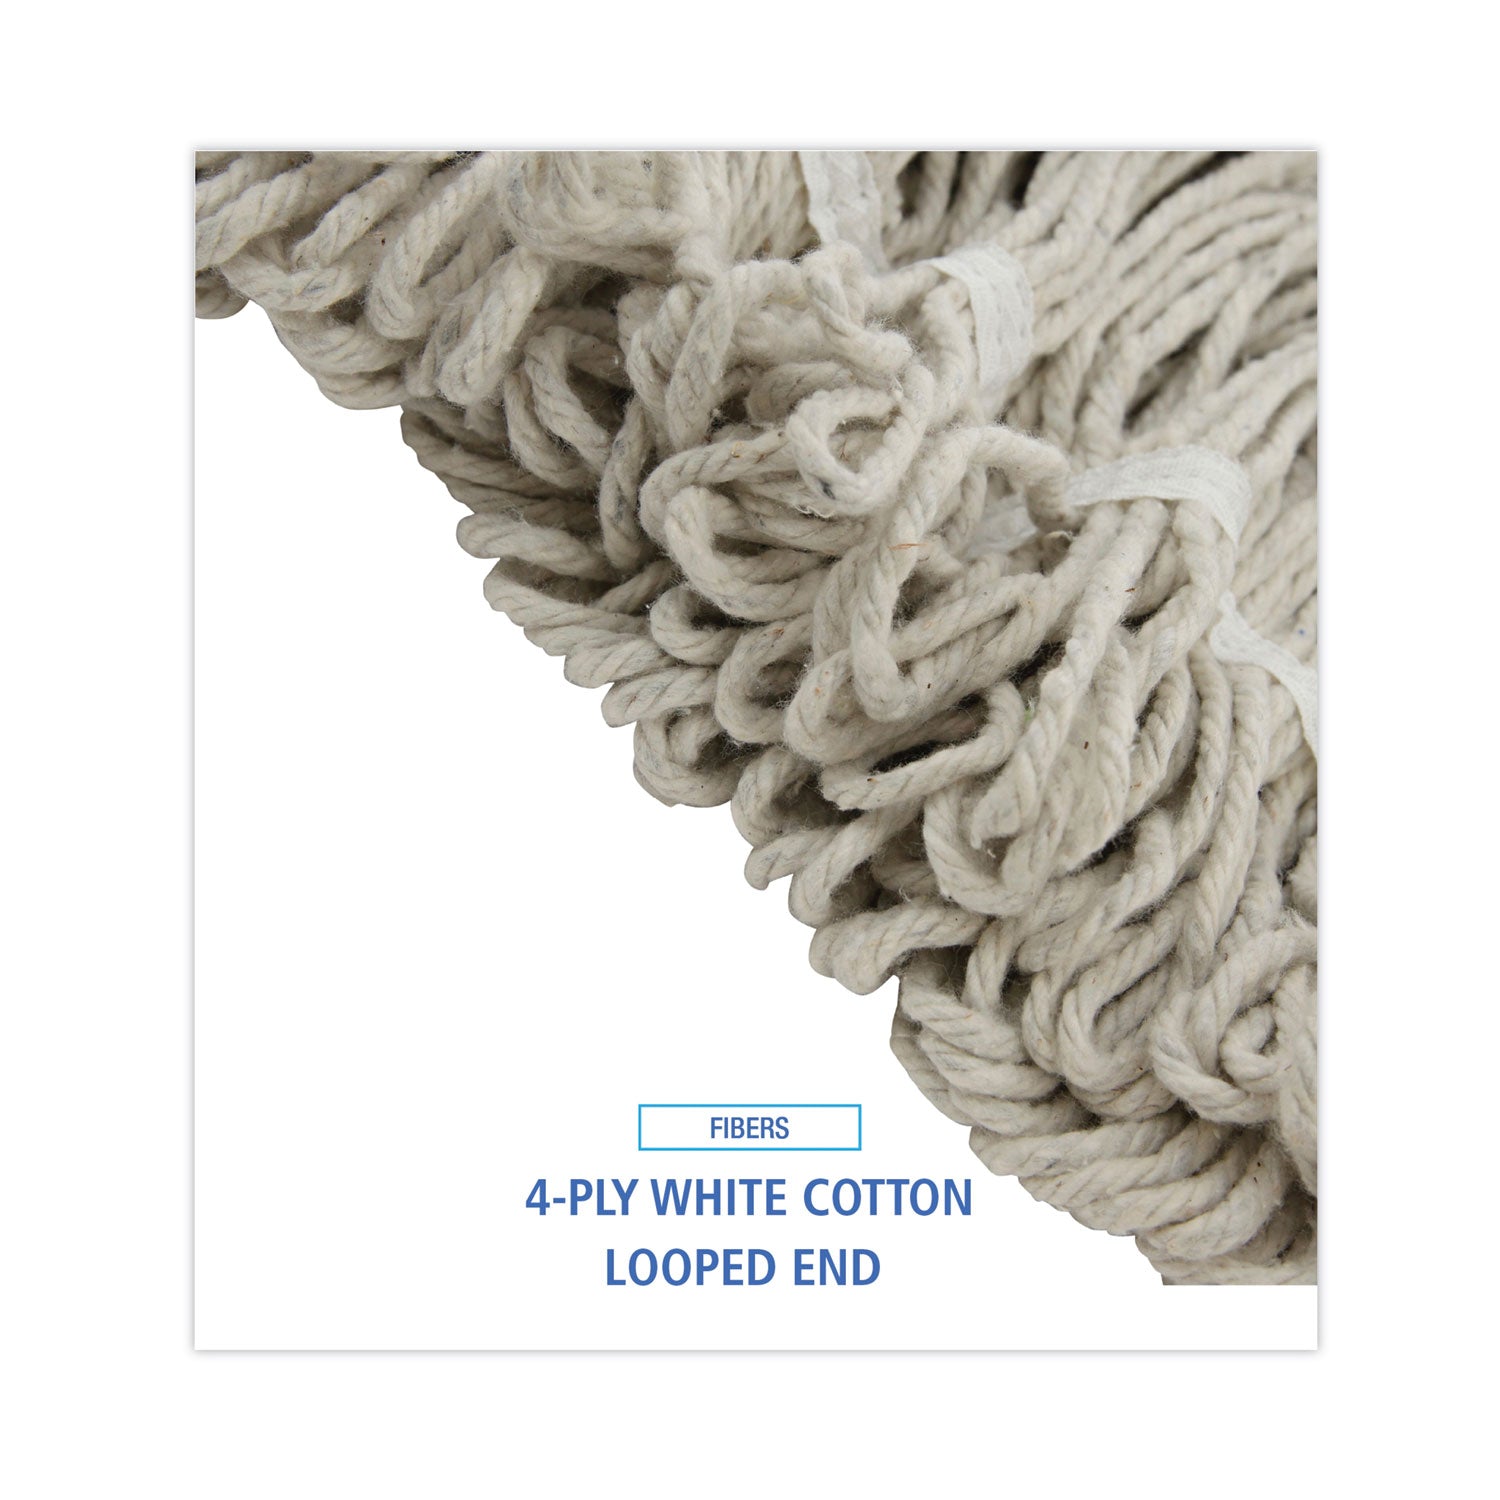 Pro Loop Web/Tailband Wet Mop Head, Cotton, 24oz, White, 12/Carton - 